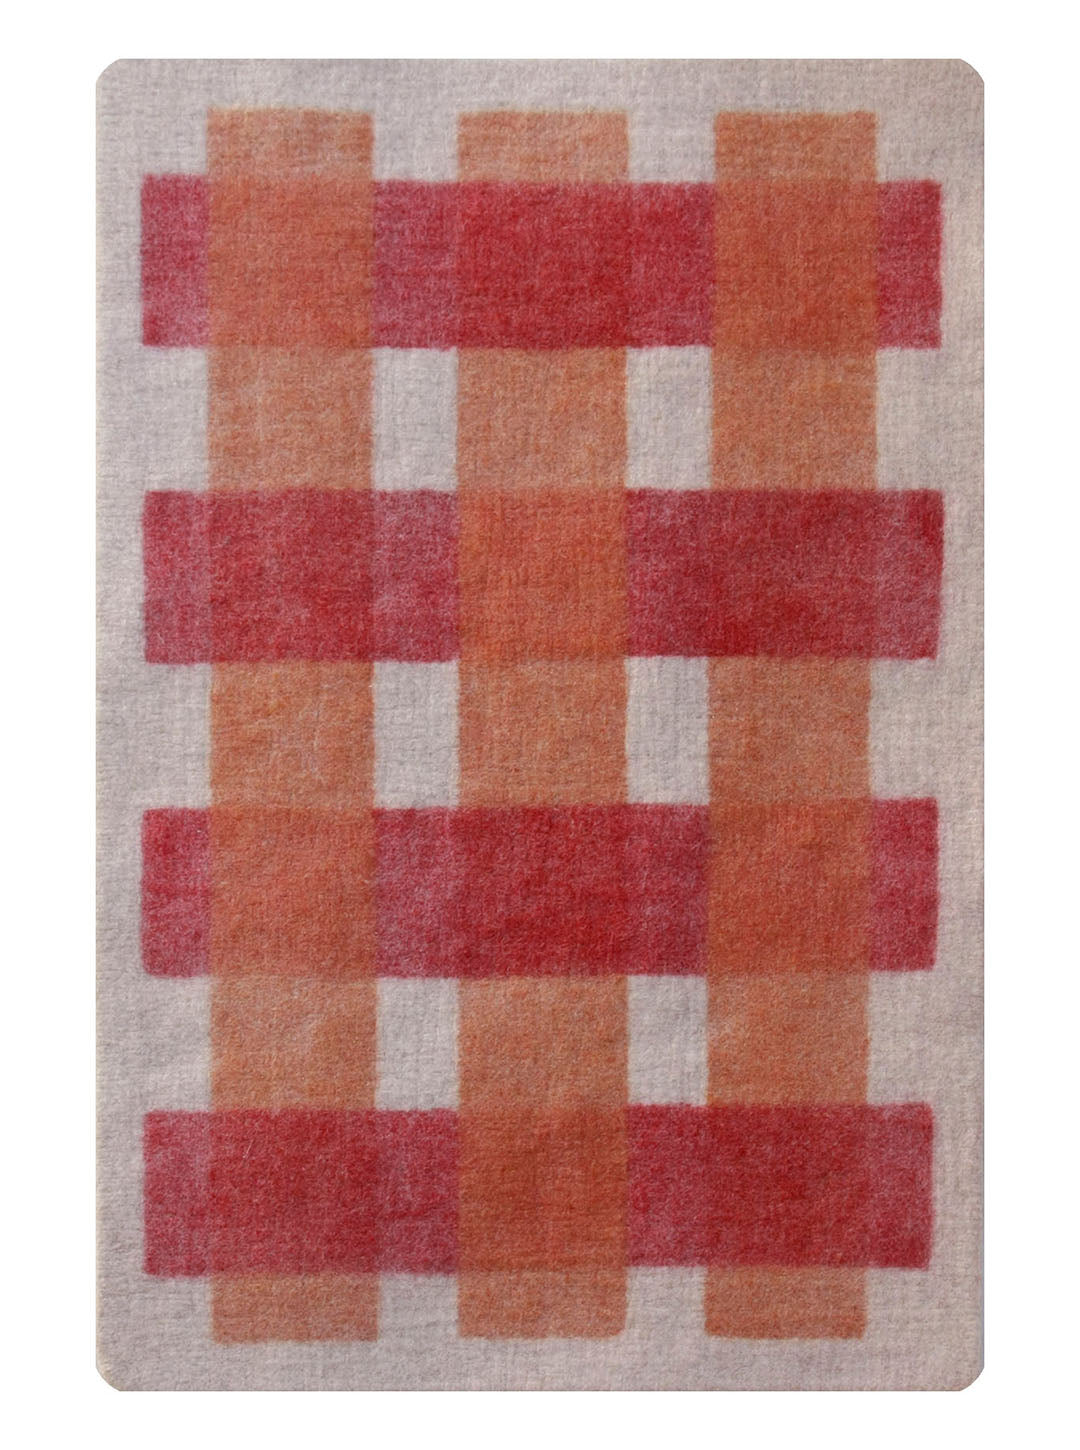 Weave rug 4' x 6'